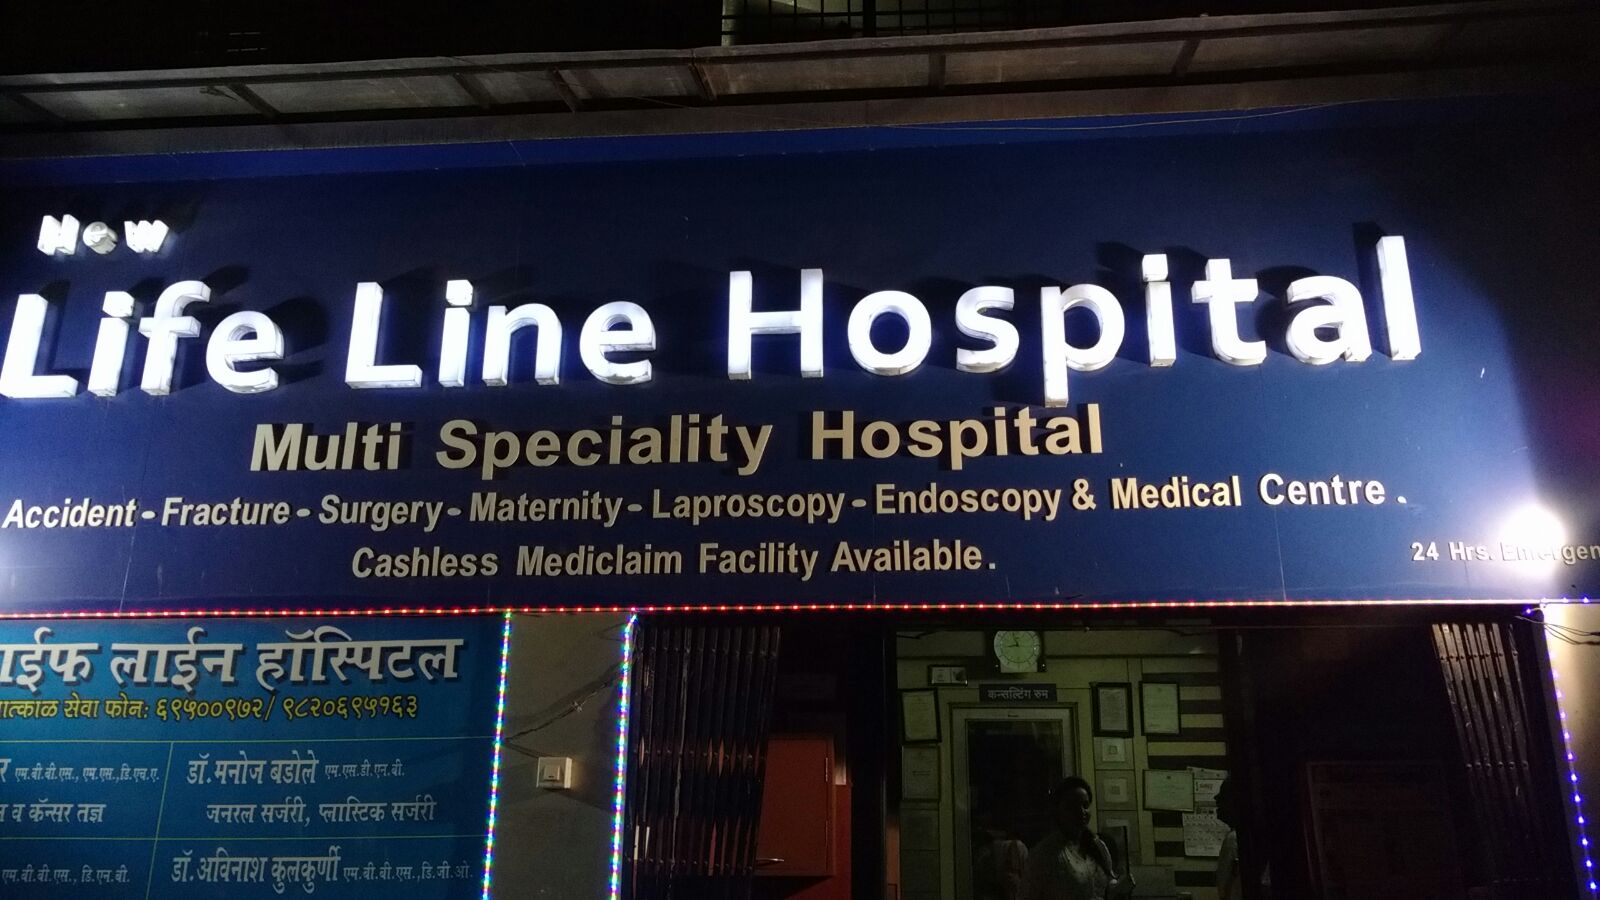 New Life Line Hospital - Life Line Hospital Surat , HD Wallpaper & Backgrounds